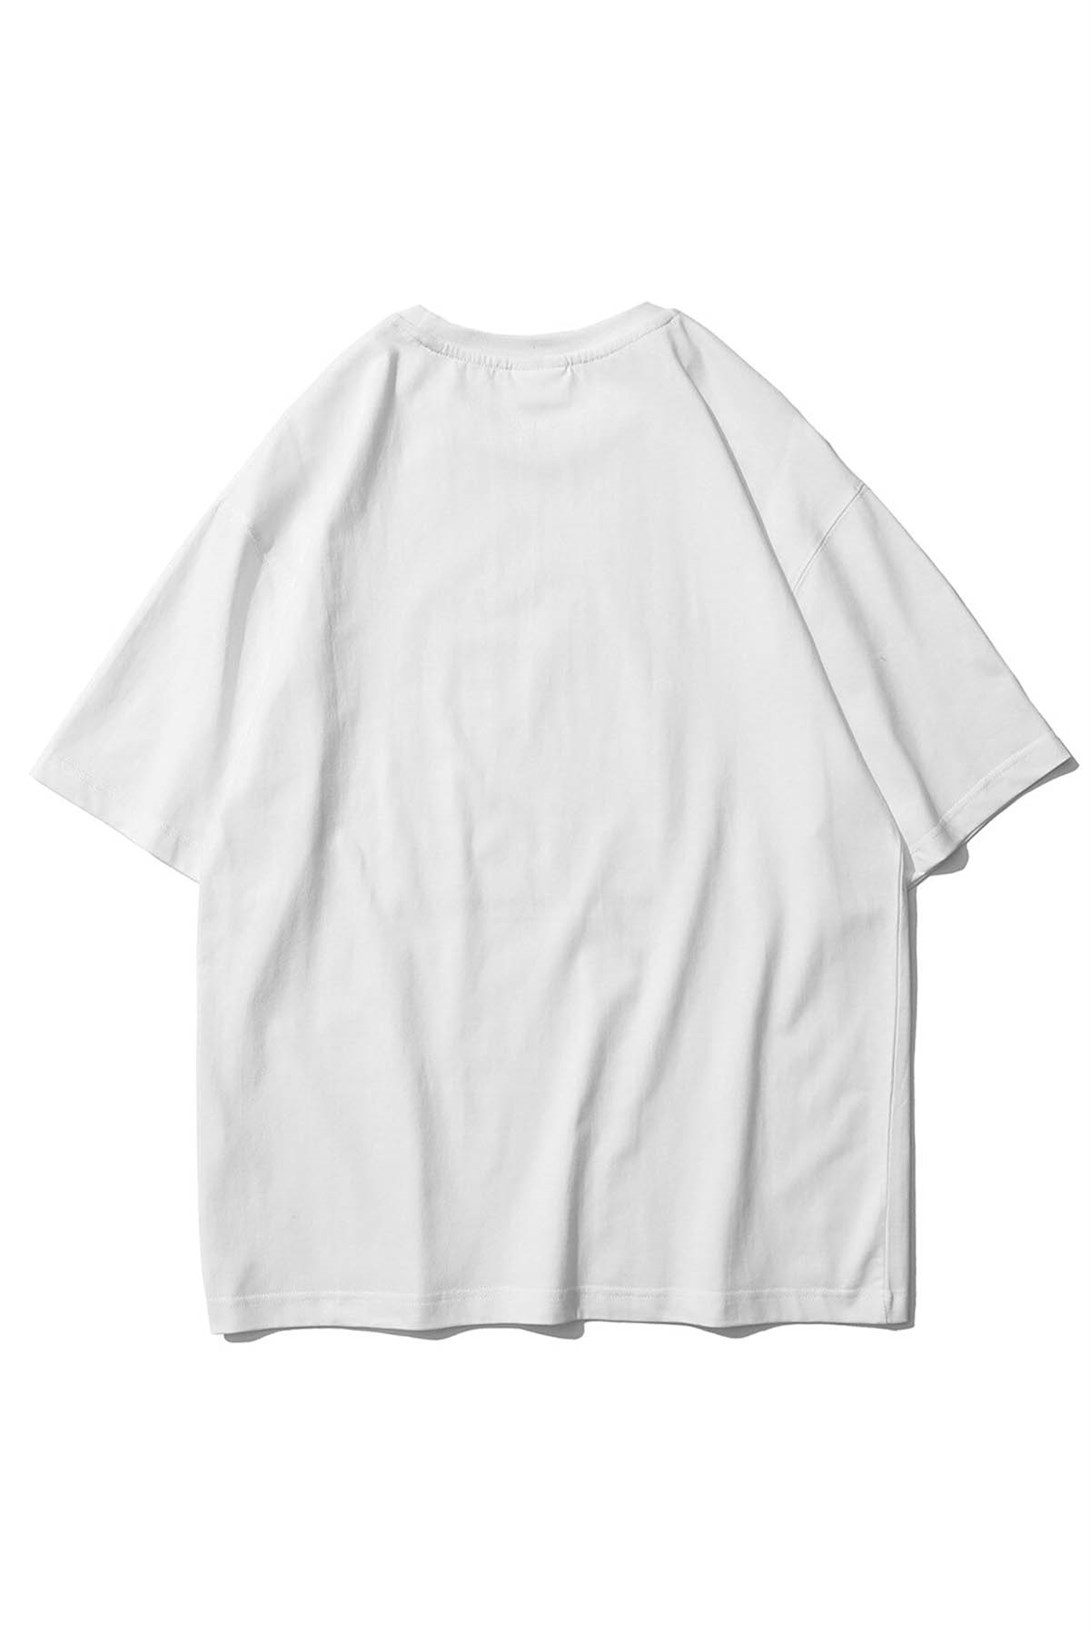 Trendiz Unisex Teddy Beyaz Tshirt